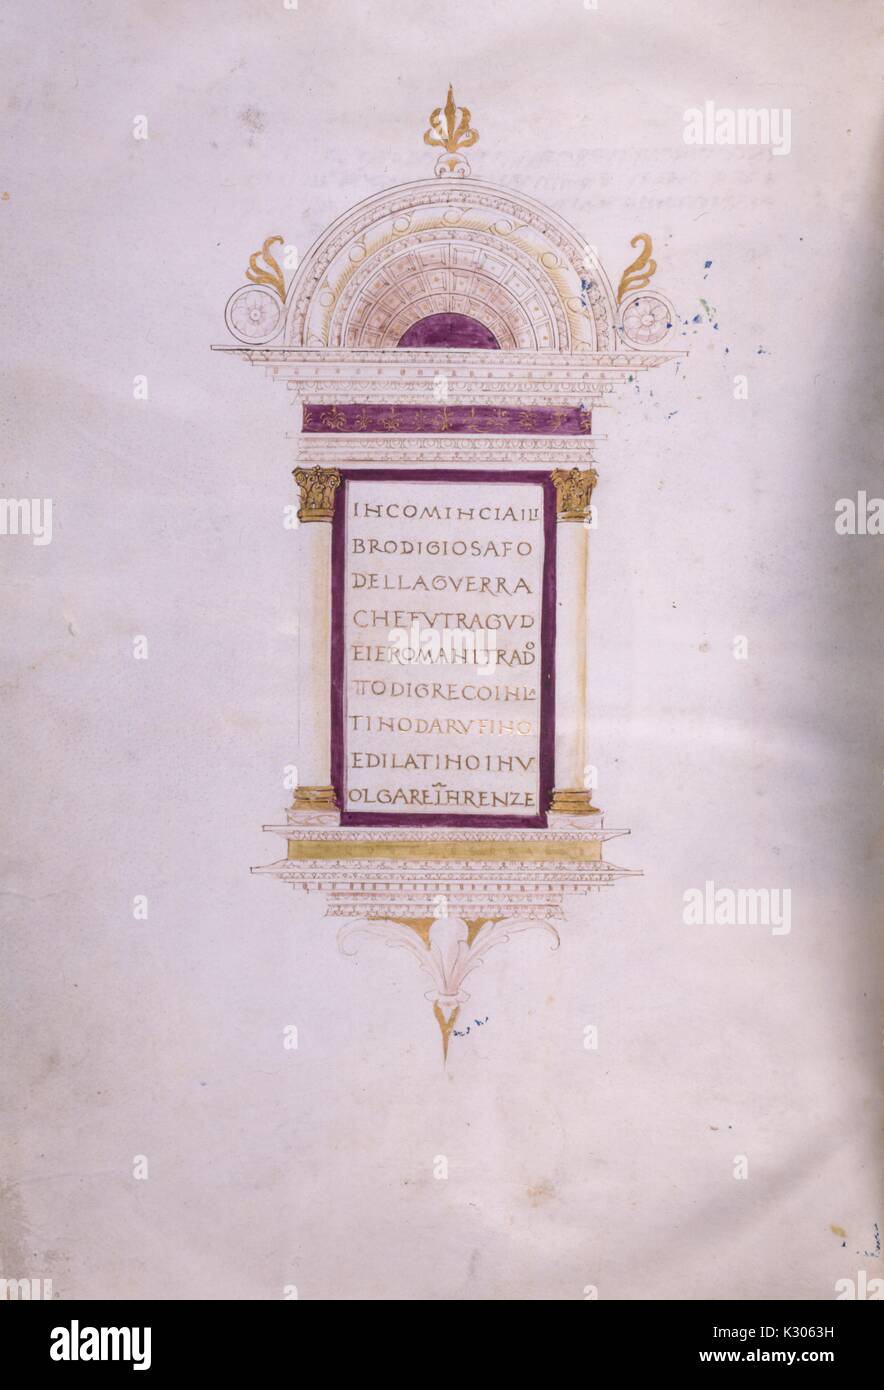 Manuscrit enluminé de la page 'Incomincia il proemio di giosafo tragudei chefu della guerra e romani' imprimé en italien, du 15e siècle, 1400. Banque D'Images